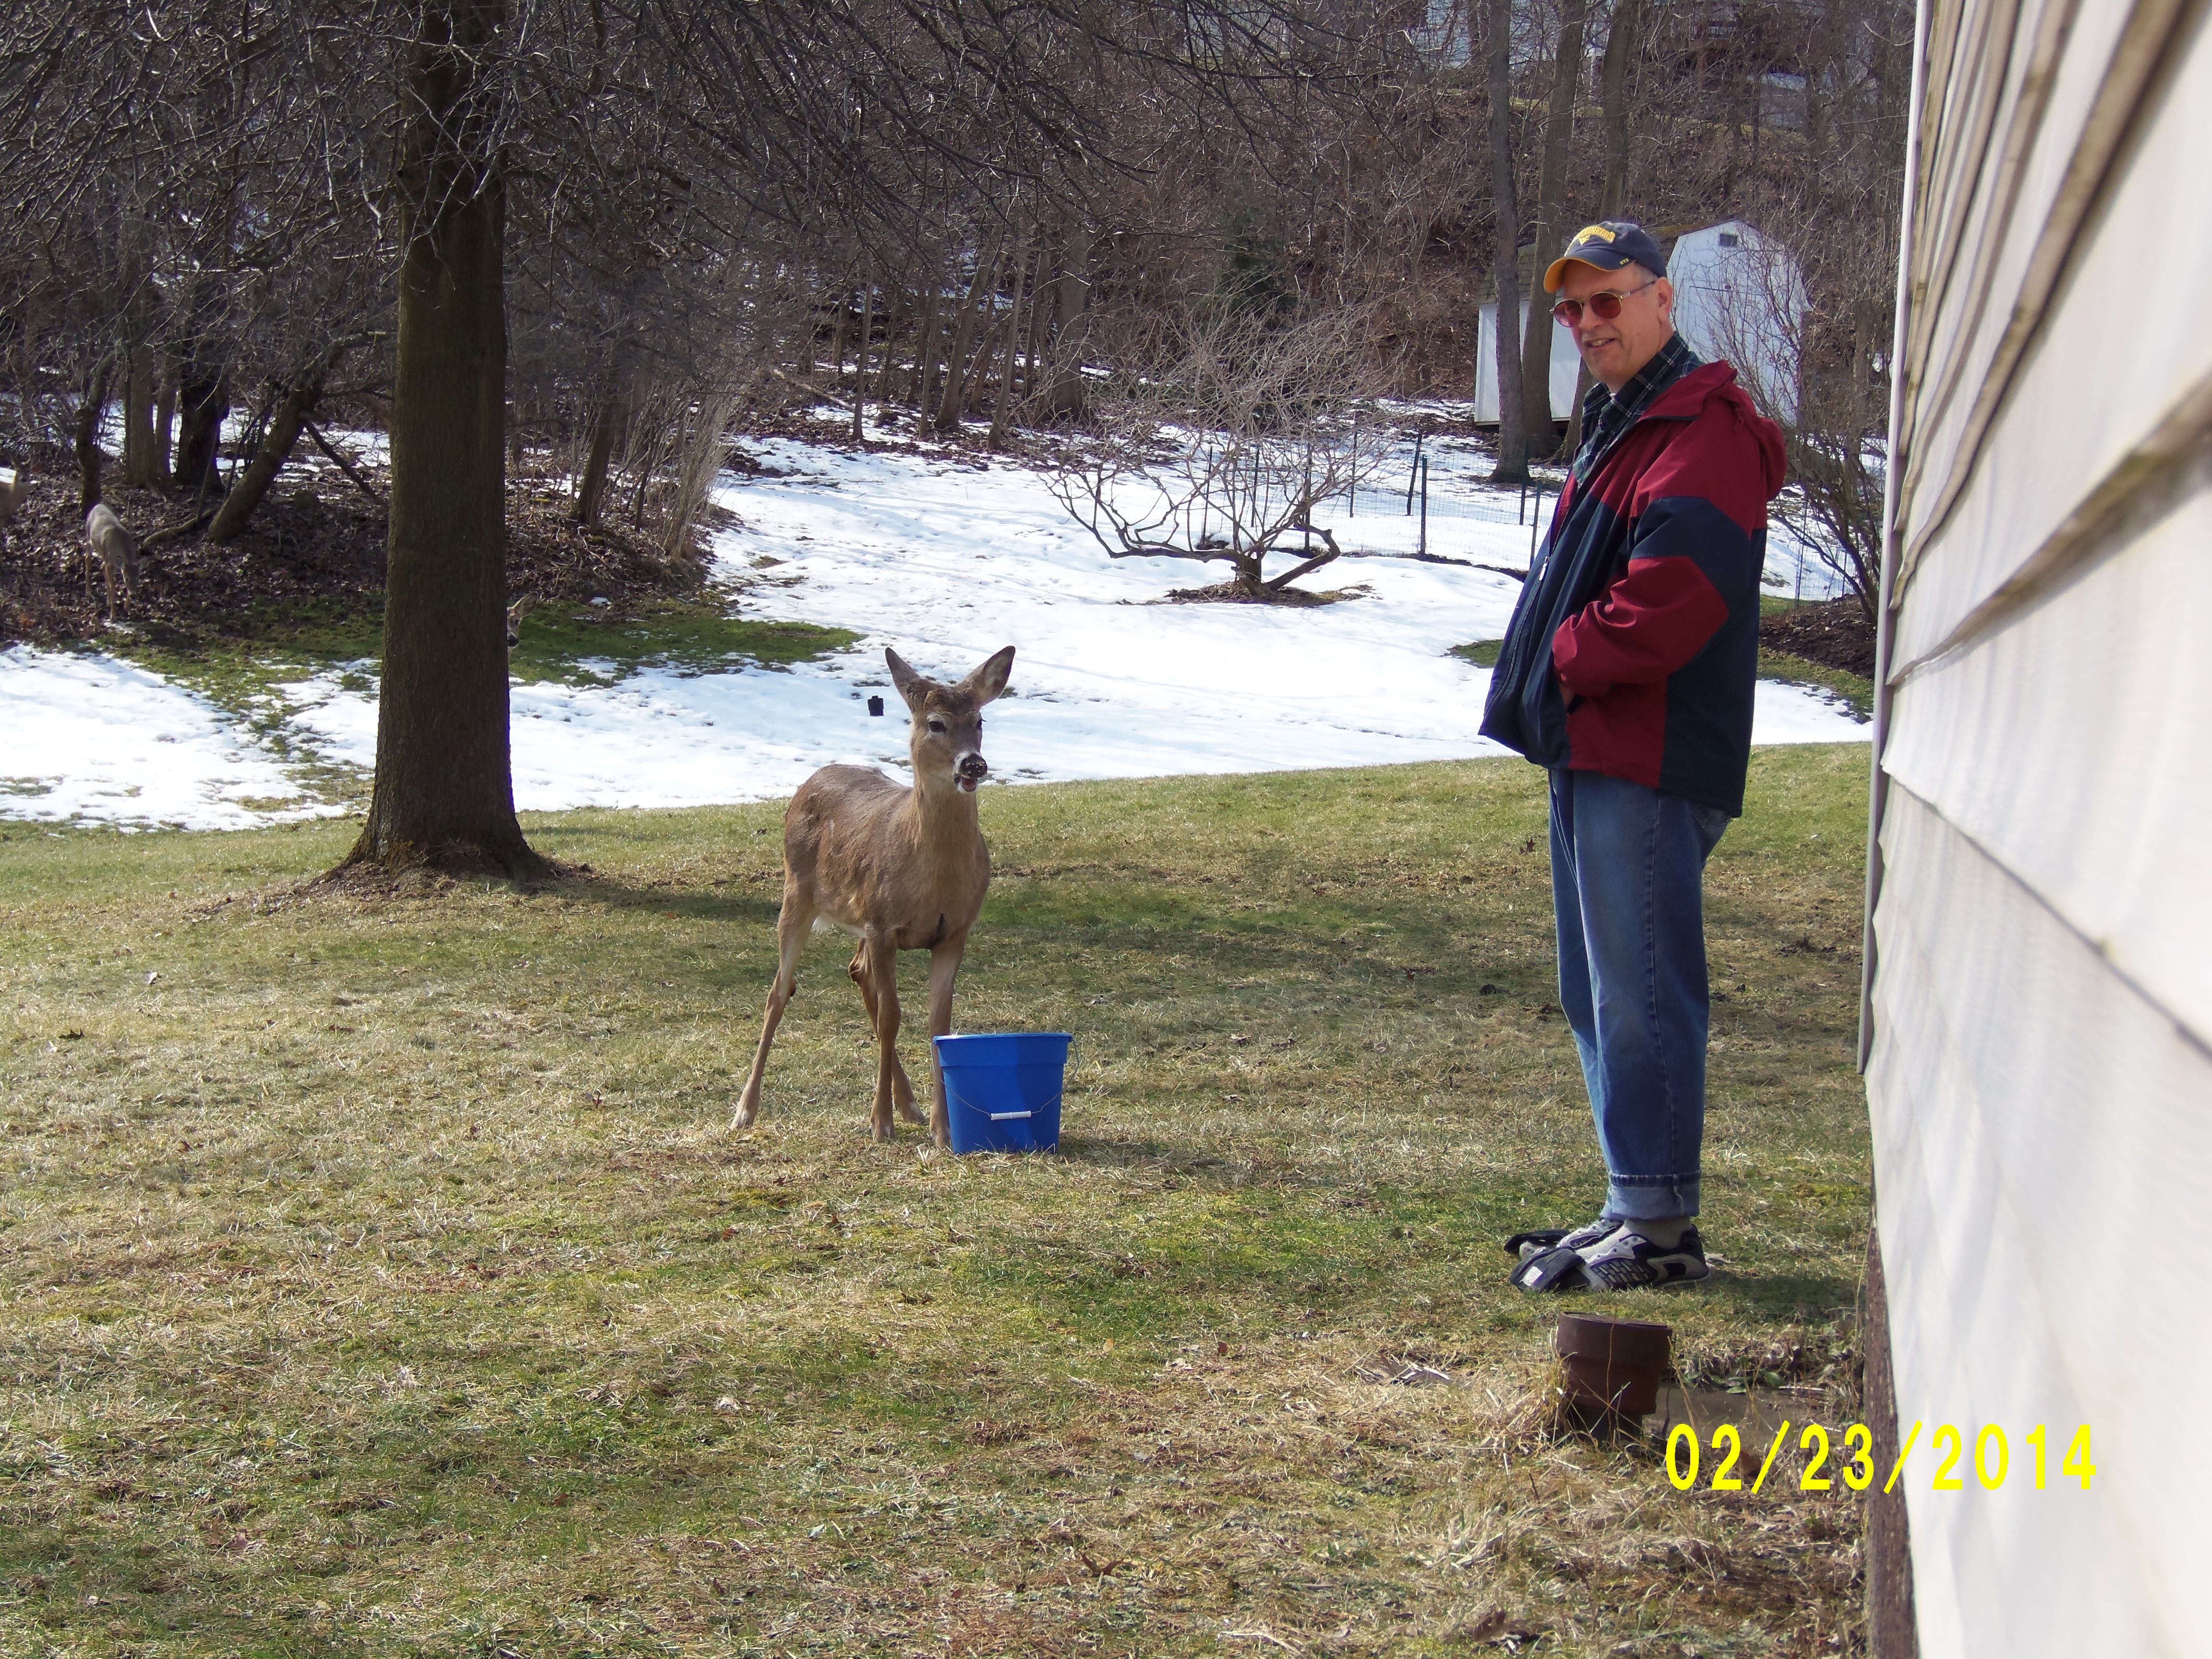 Pat LOVED the deer, and the deer loved him. :)